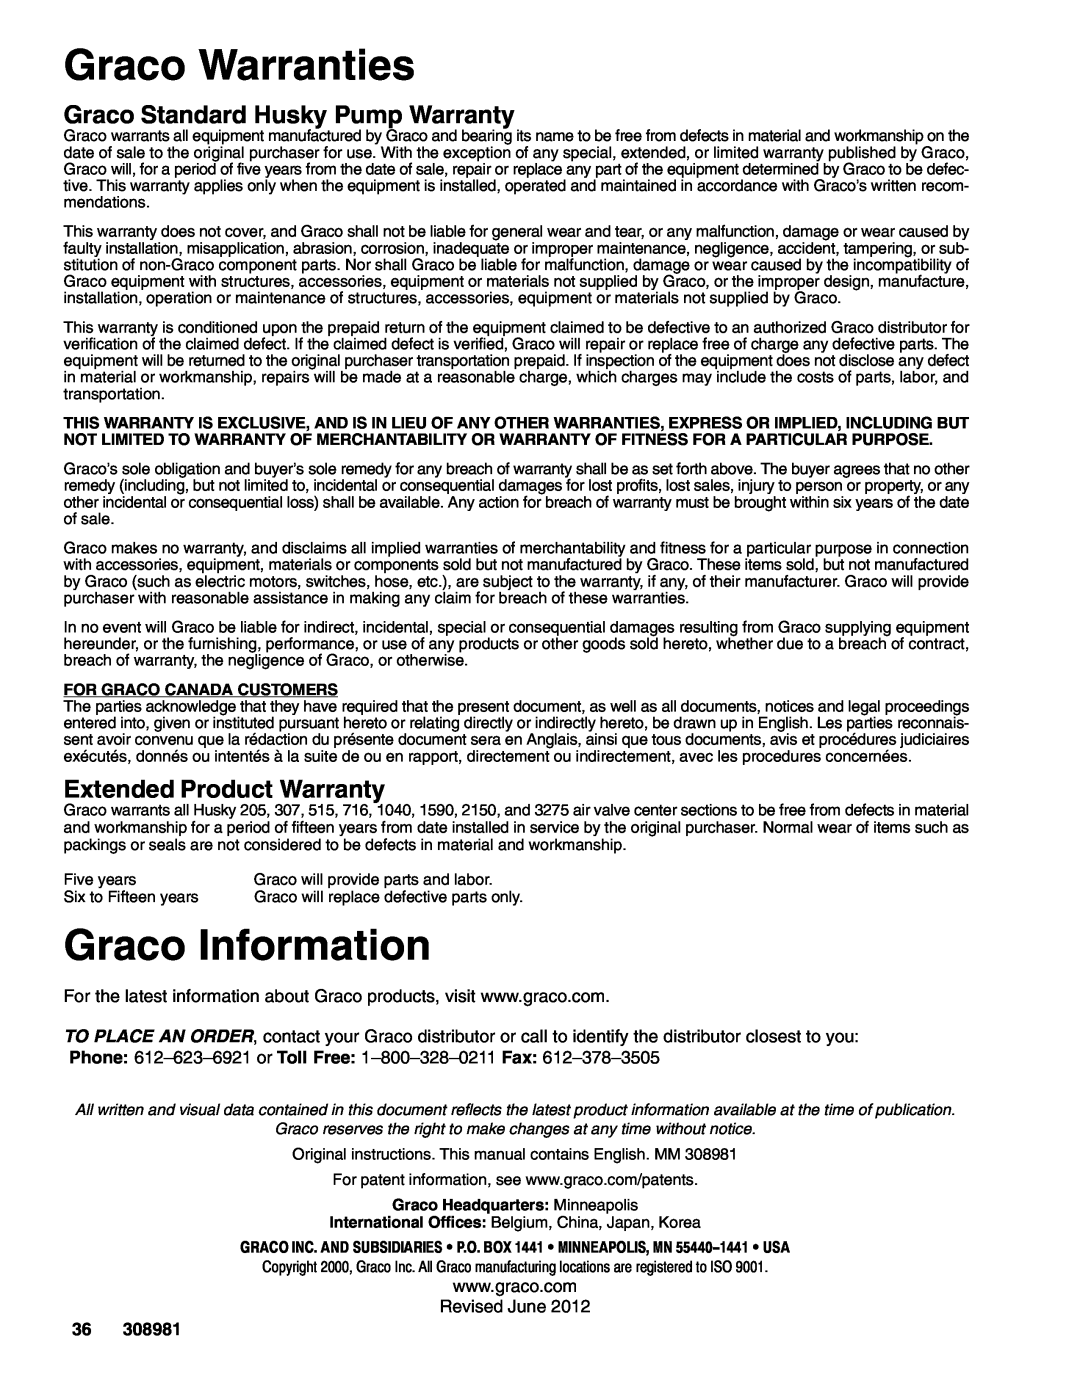 Graco Inc 716, D 5 D Graco Warranties, Graco Information, Graco Standard Husky Pump Warranty, Extended Product Warranty 